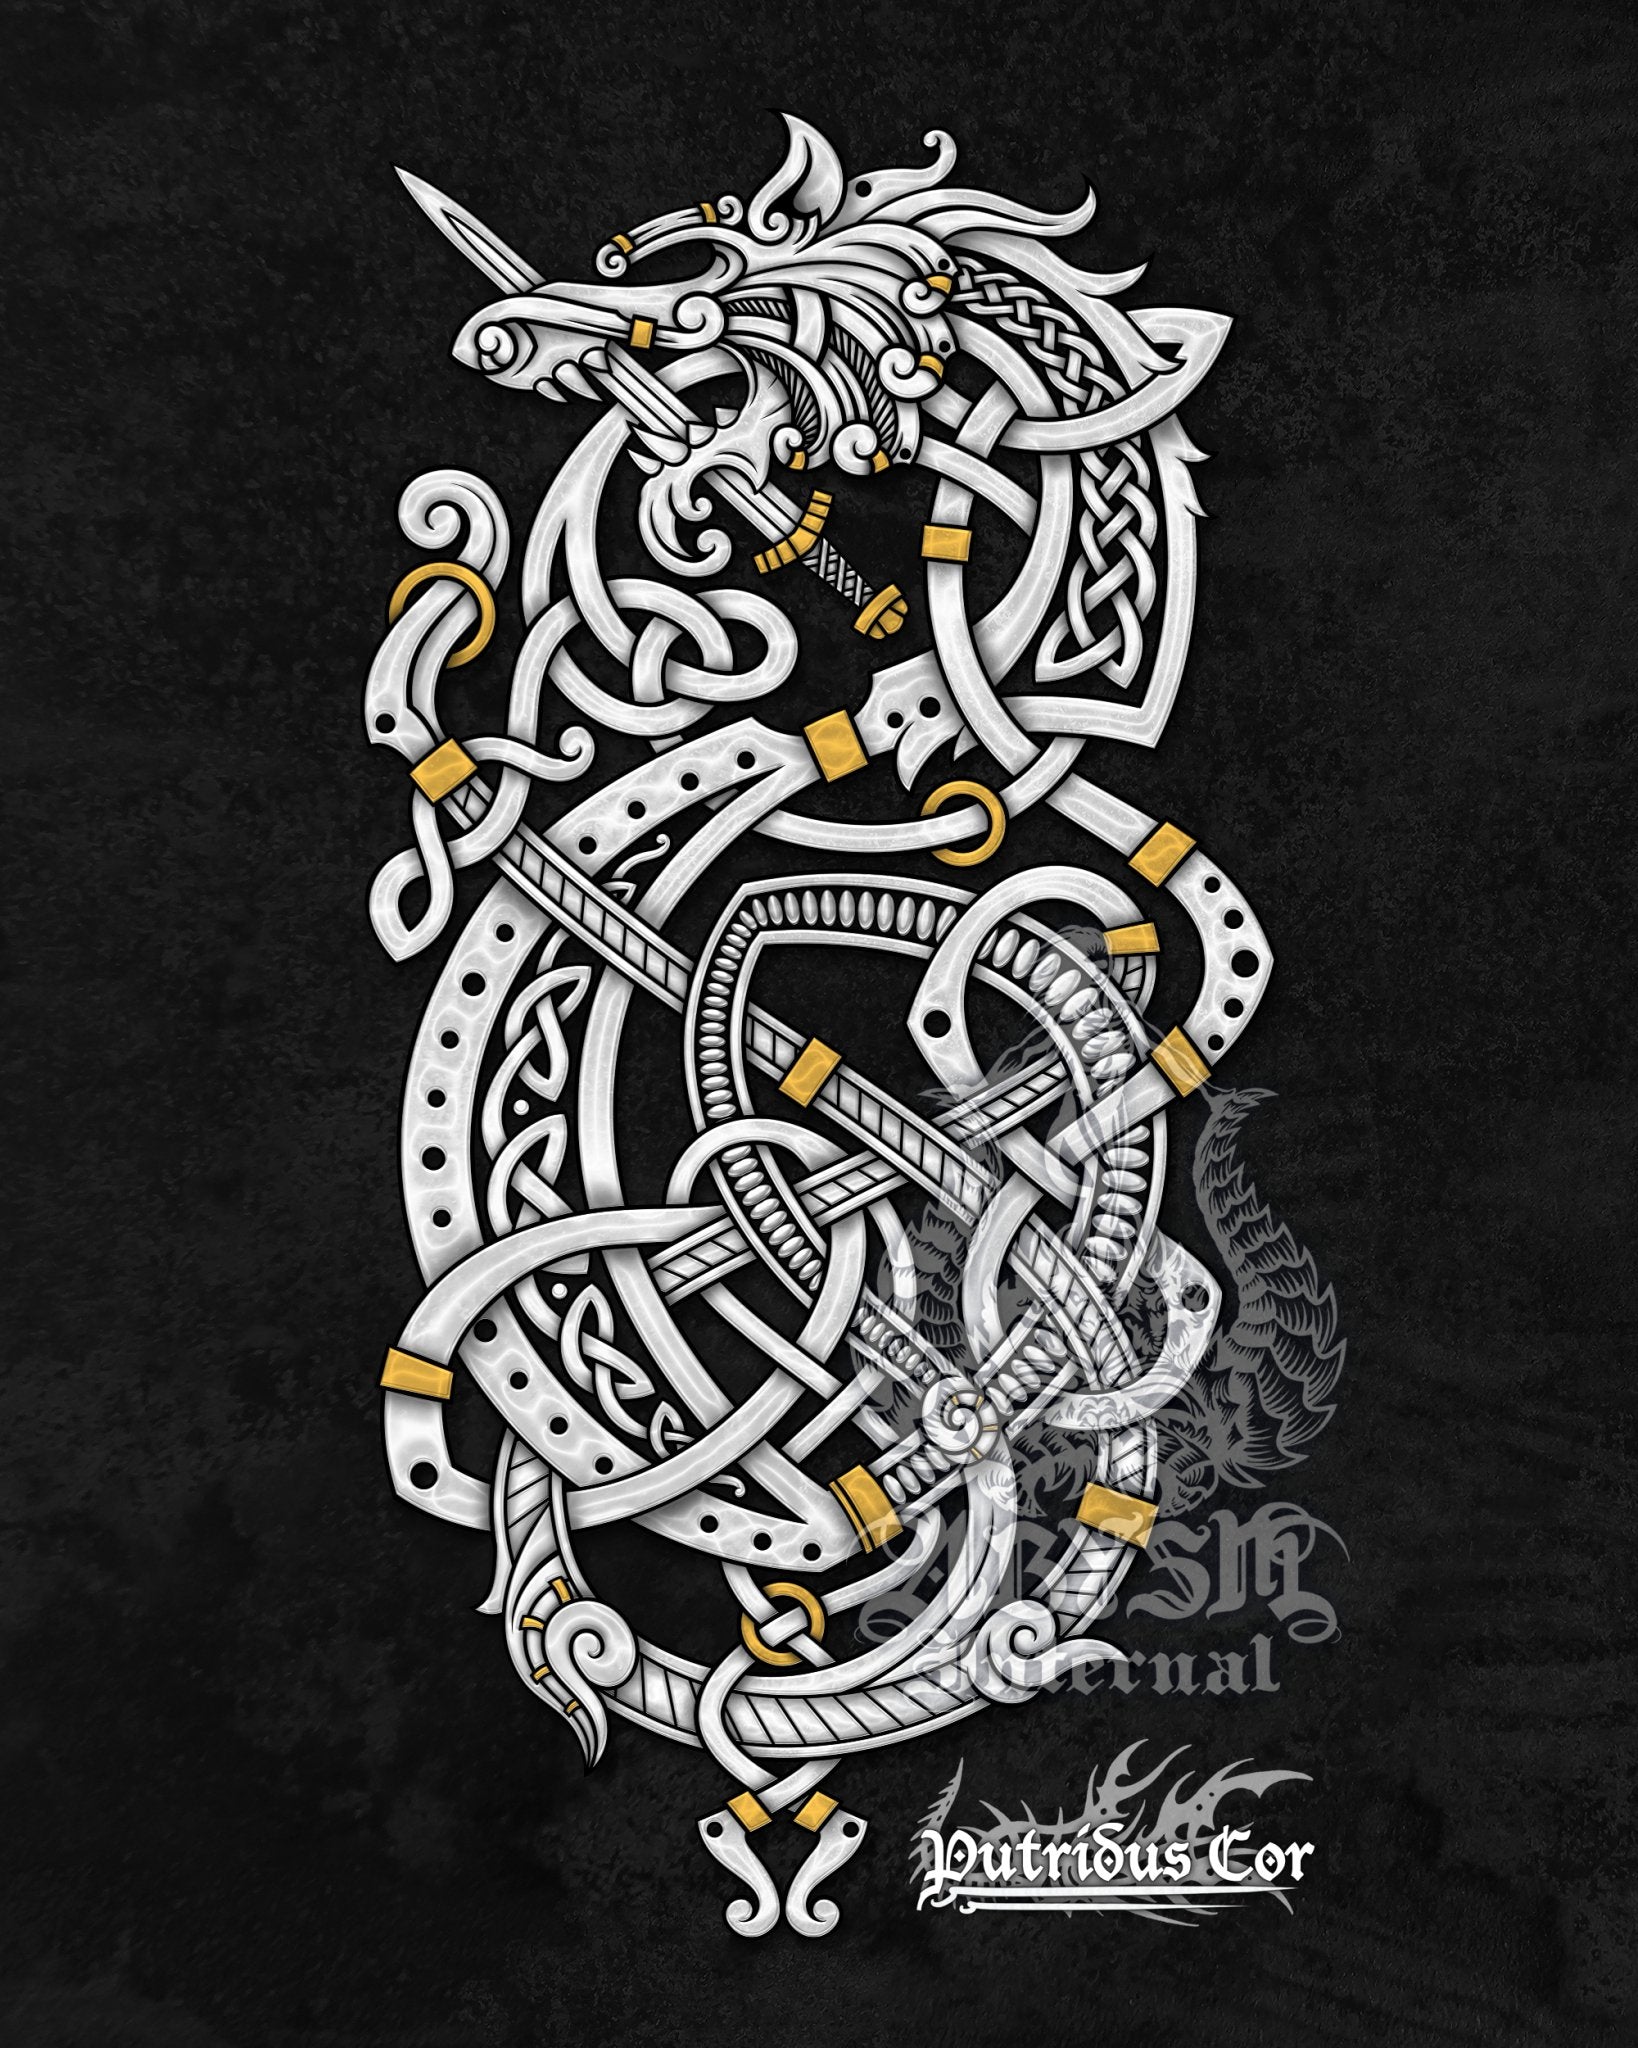 Fenrir art, custom Viking and norse designs, single transparent knotwork figure for merch or tattoos - Abysm Internal